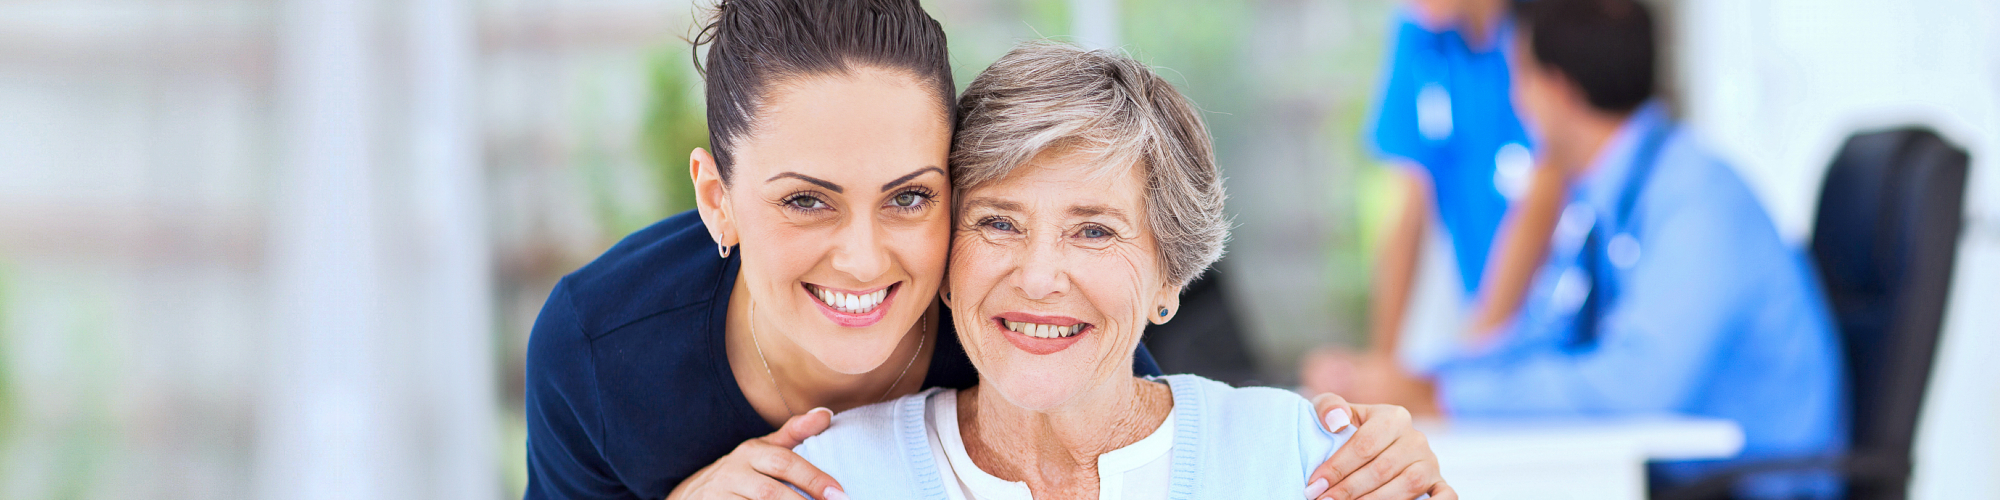 caregiver hugging senior woman while smiling